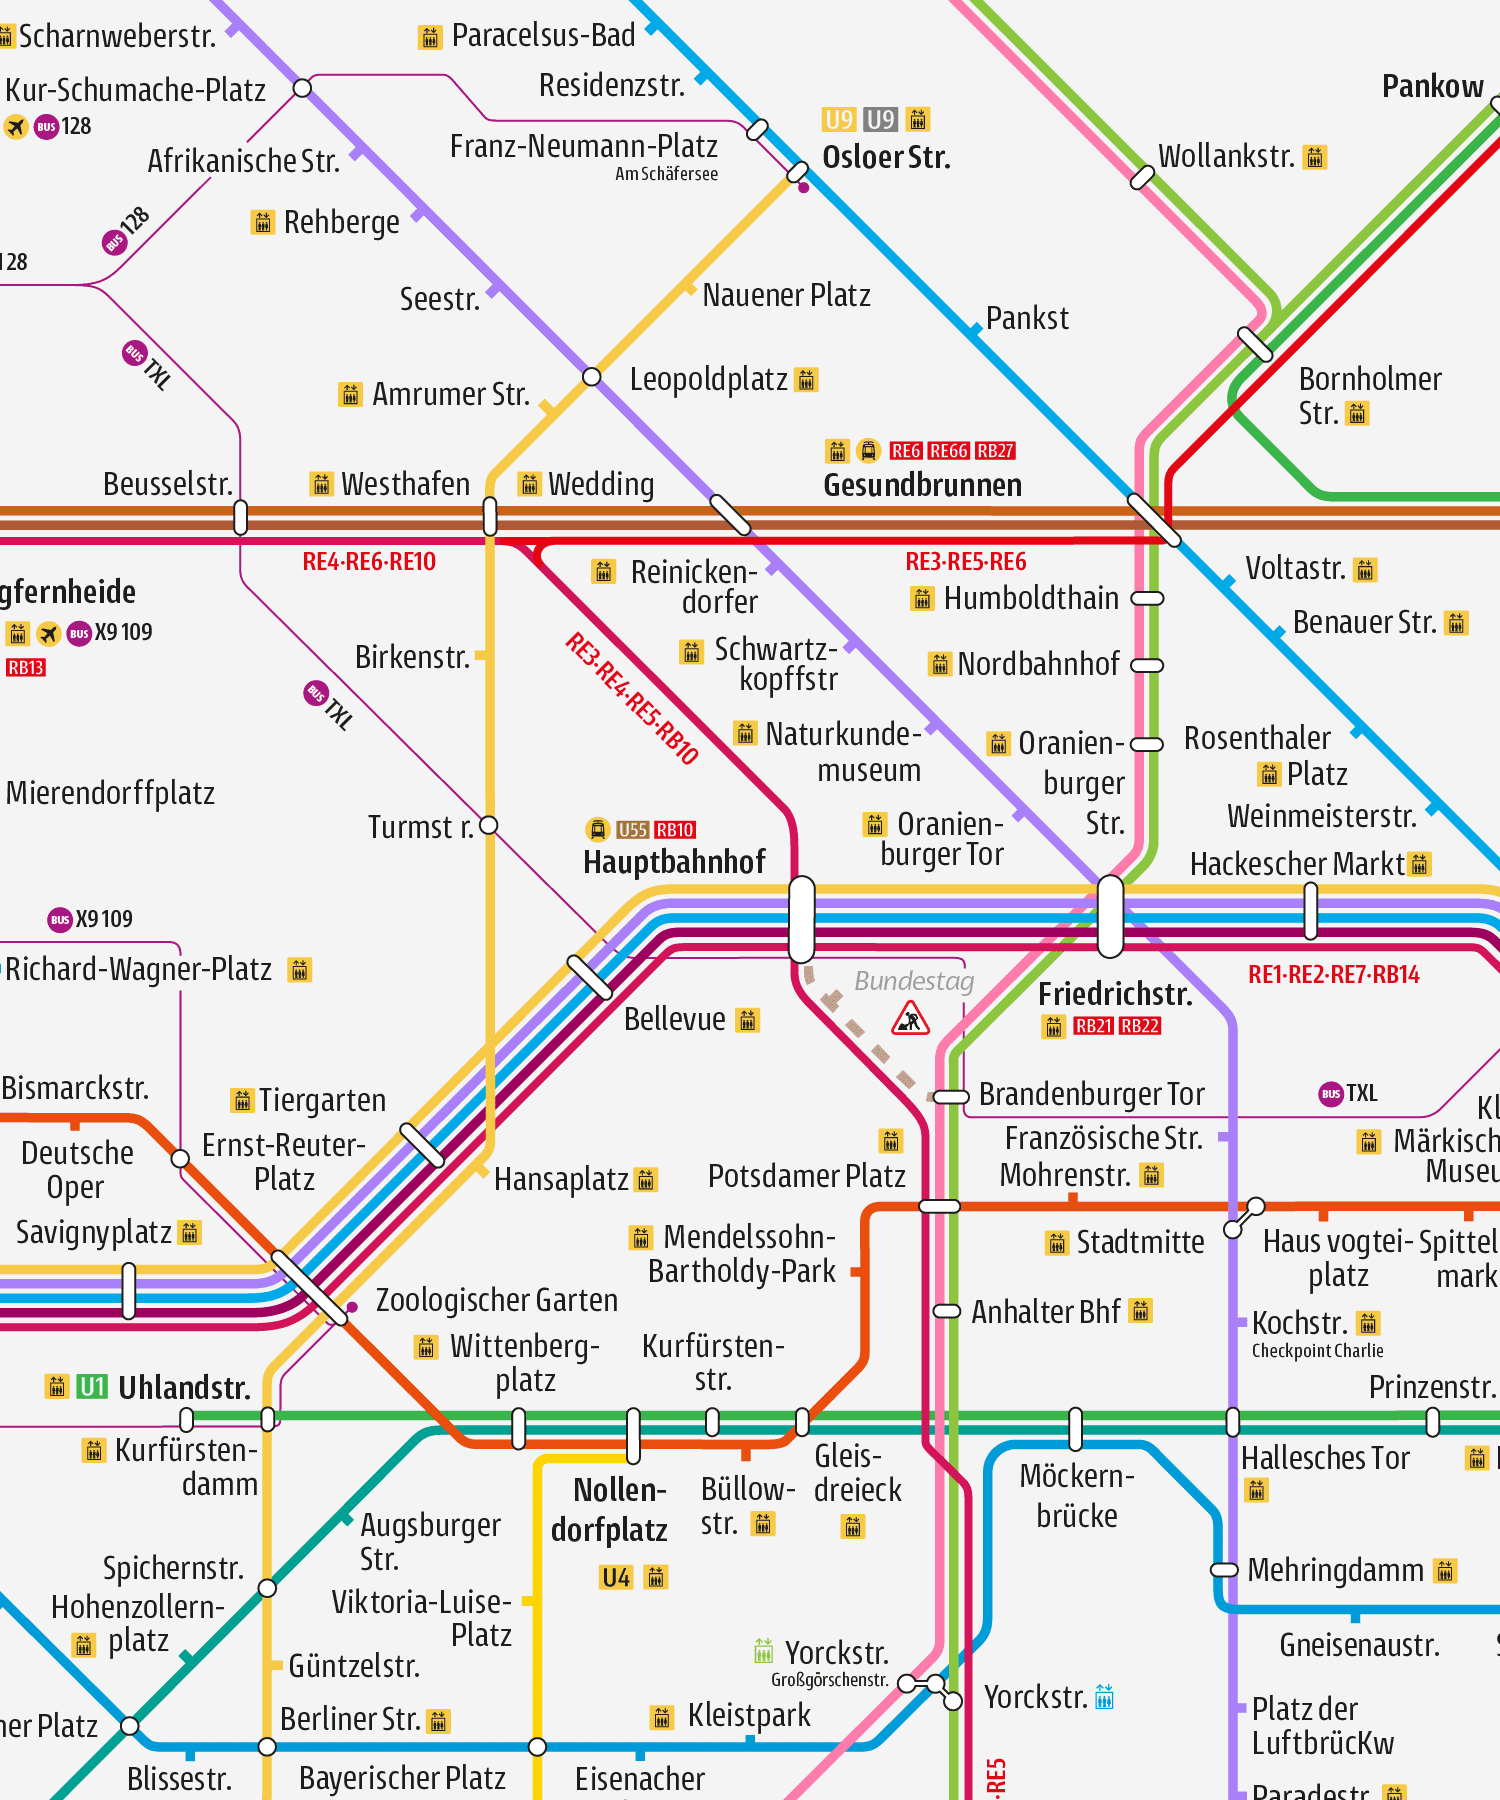 Map of Berlin Subway (U-Bahnmap) using Entorno